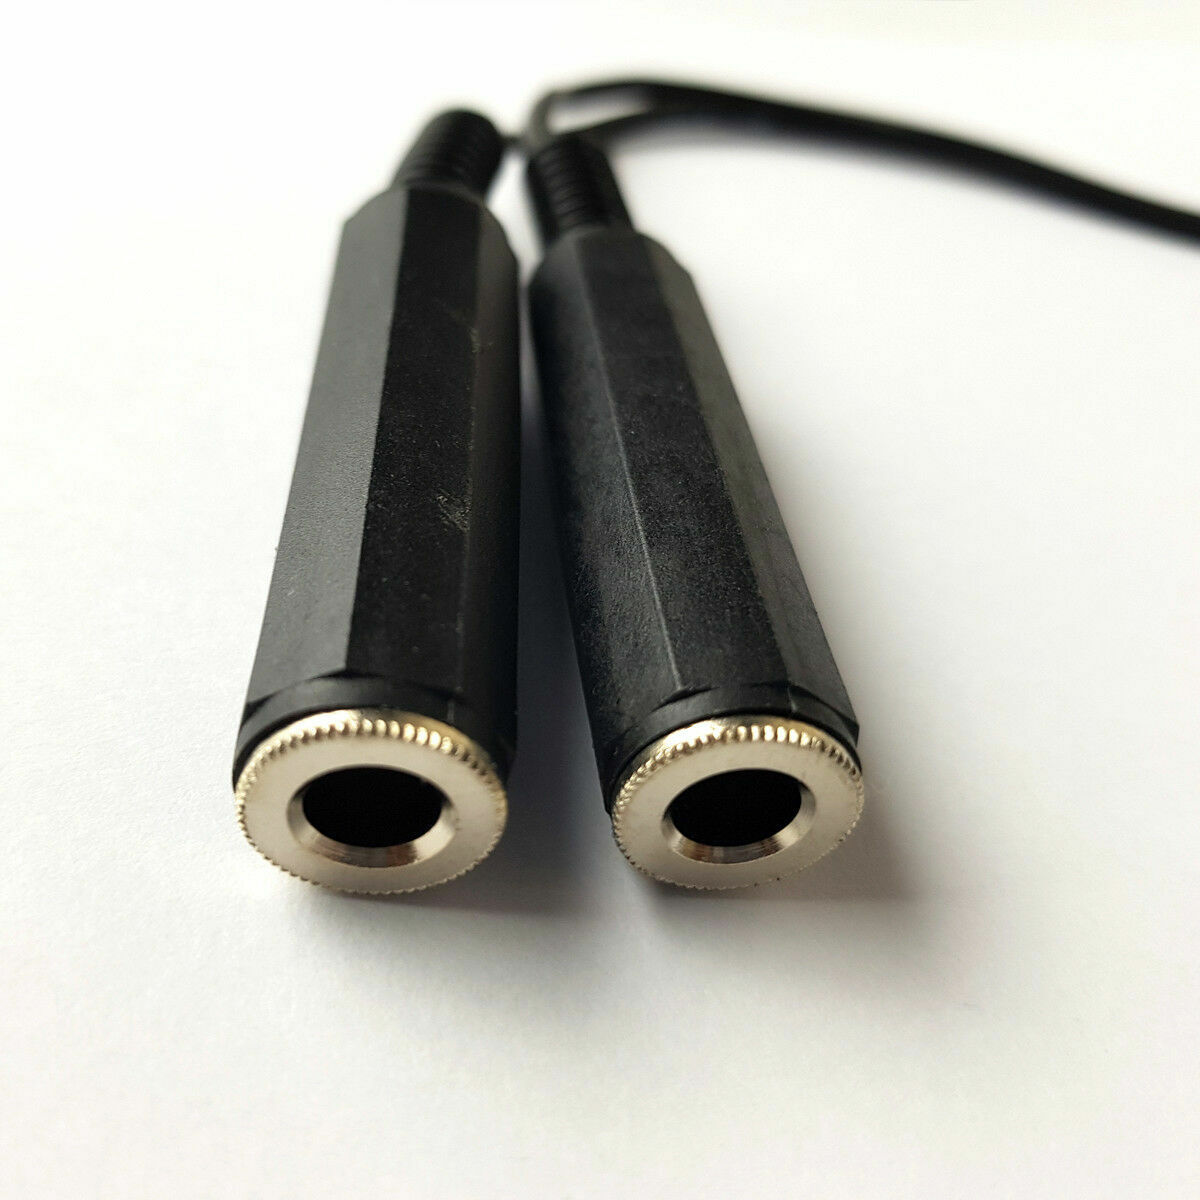 635mm-Stereo-Splitter-Cable-14-Plug-To-2-x-Jack-Socket-Headphone-Adapter-253973185634-3.jpg